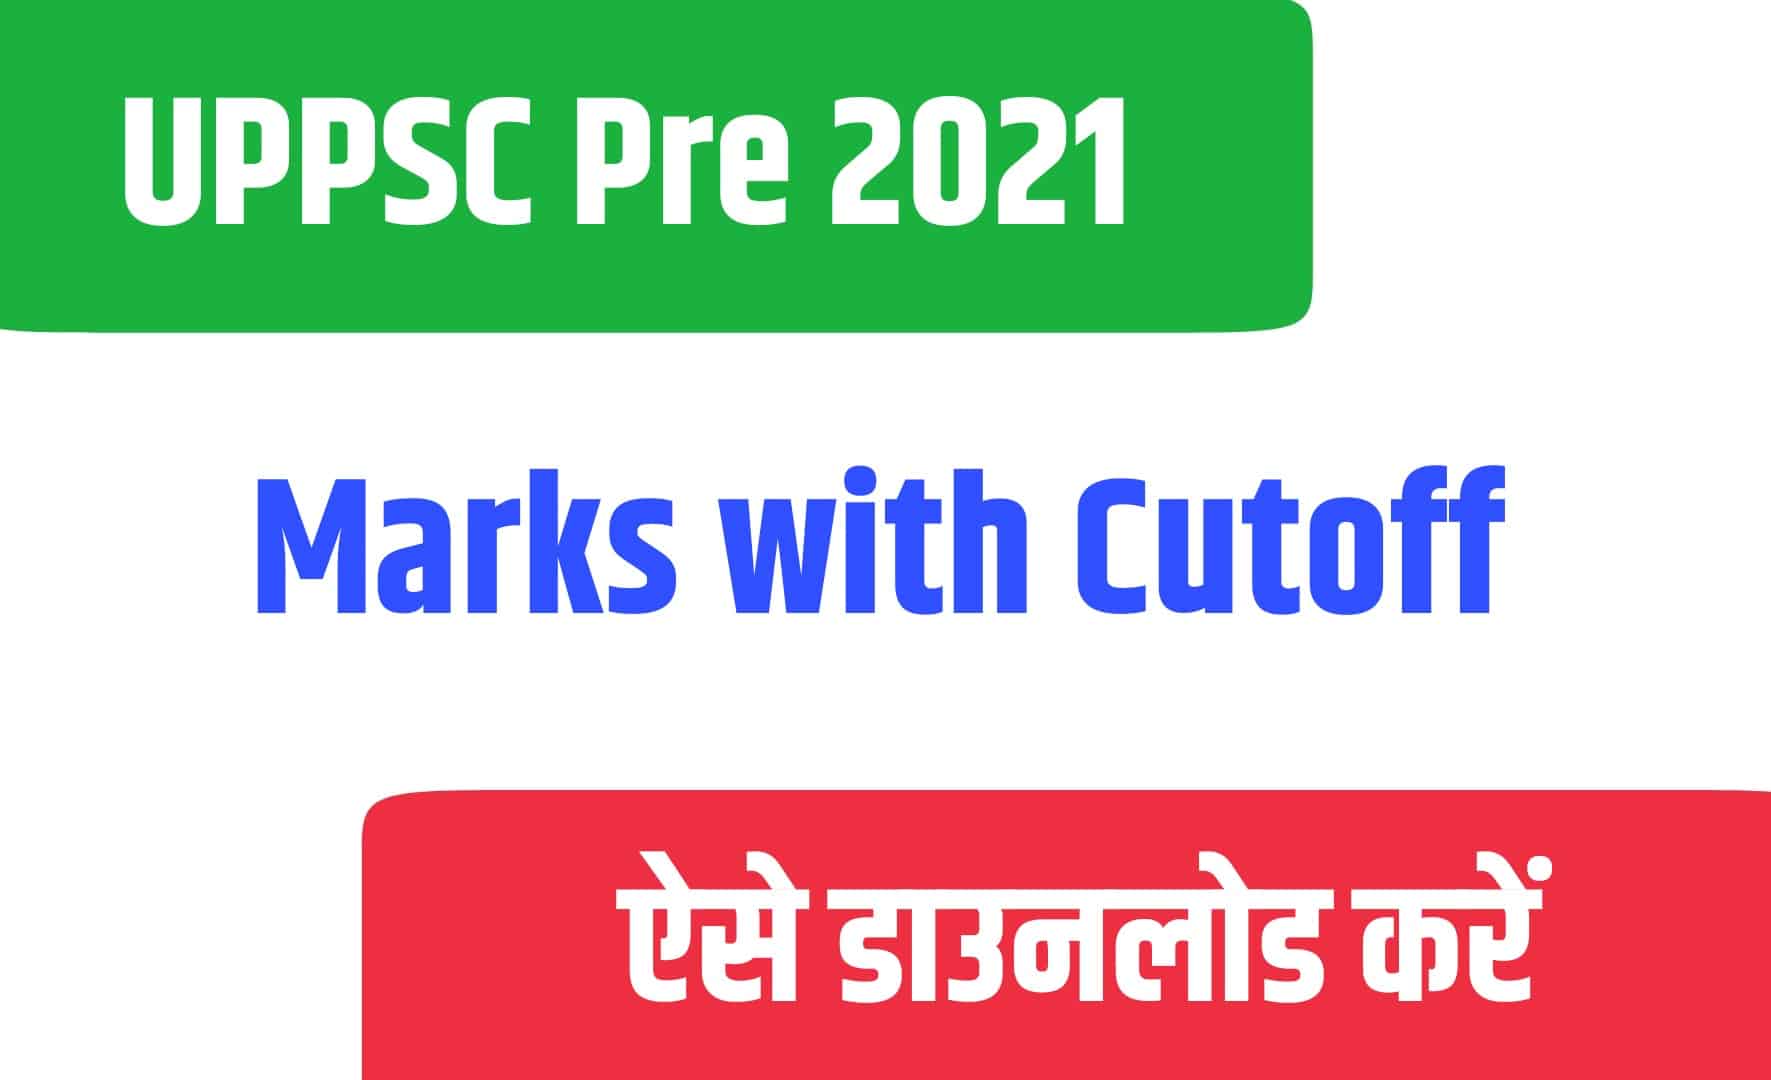 UPPSC Pre 2021 Marks with Cutoff